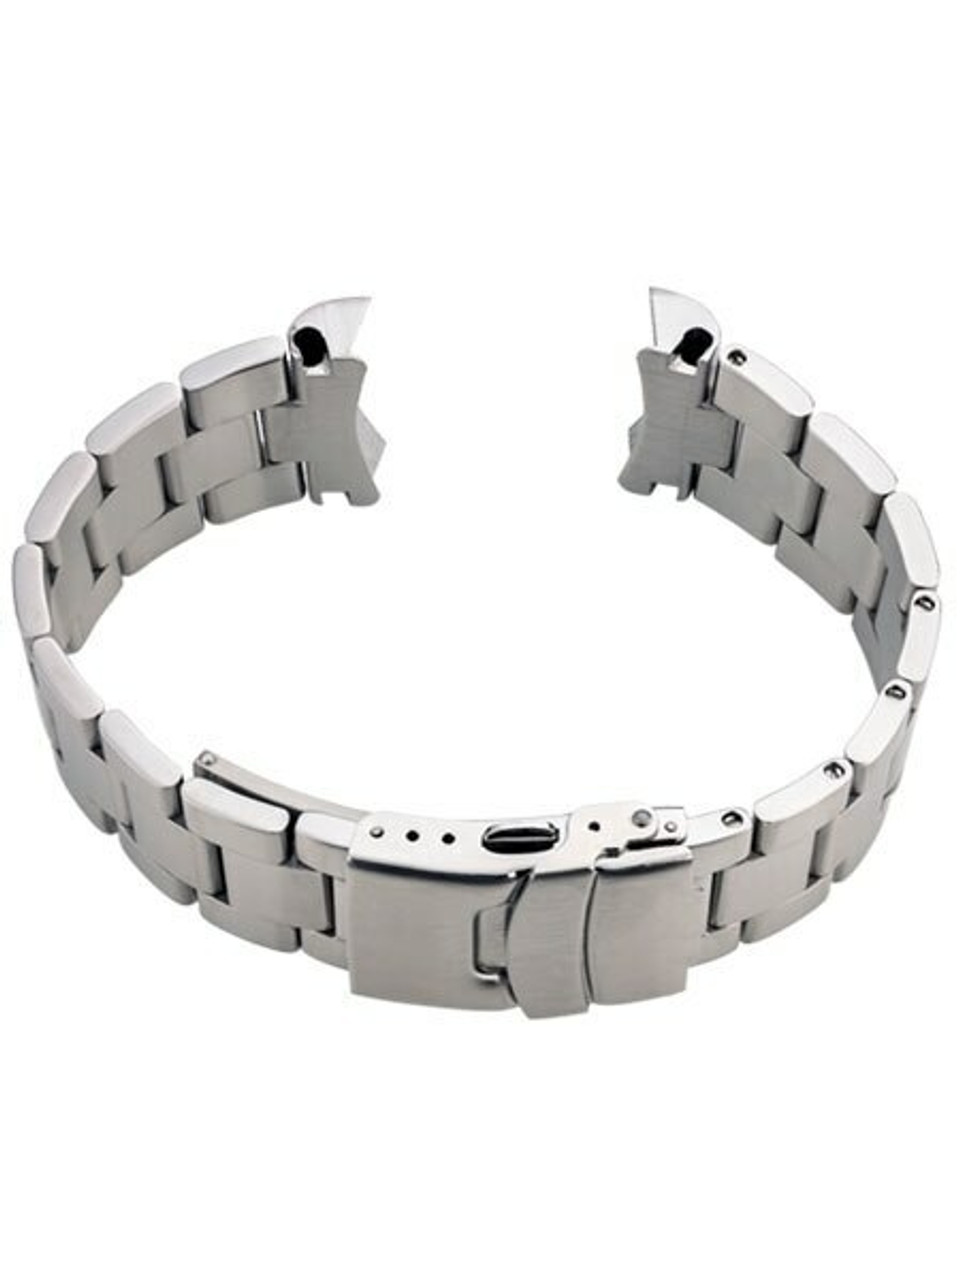 Stainless Steel Magnetic Bracelet - Long Island SGS Double